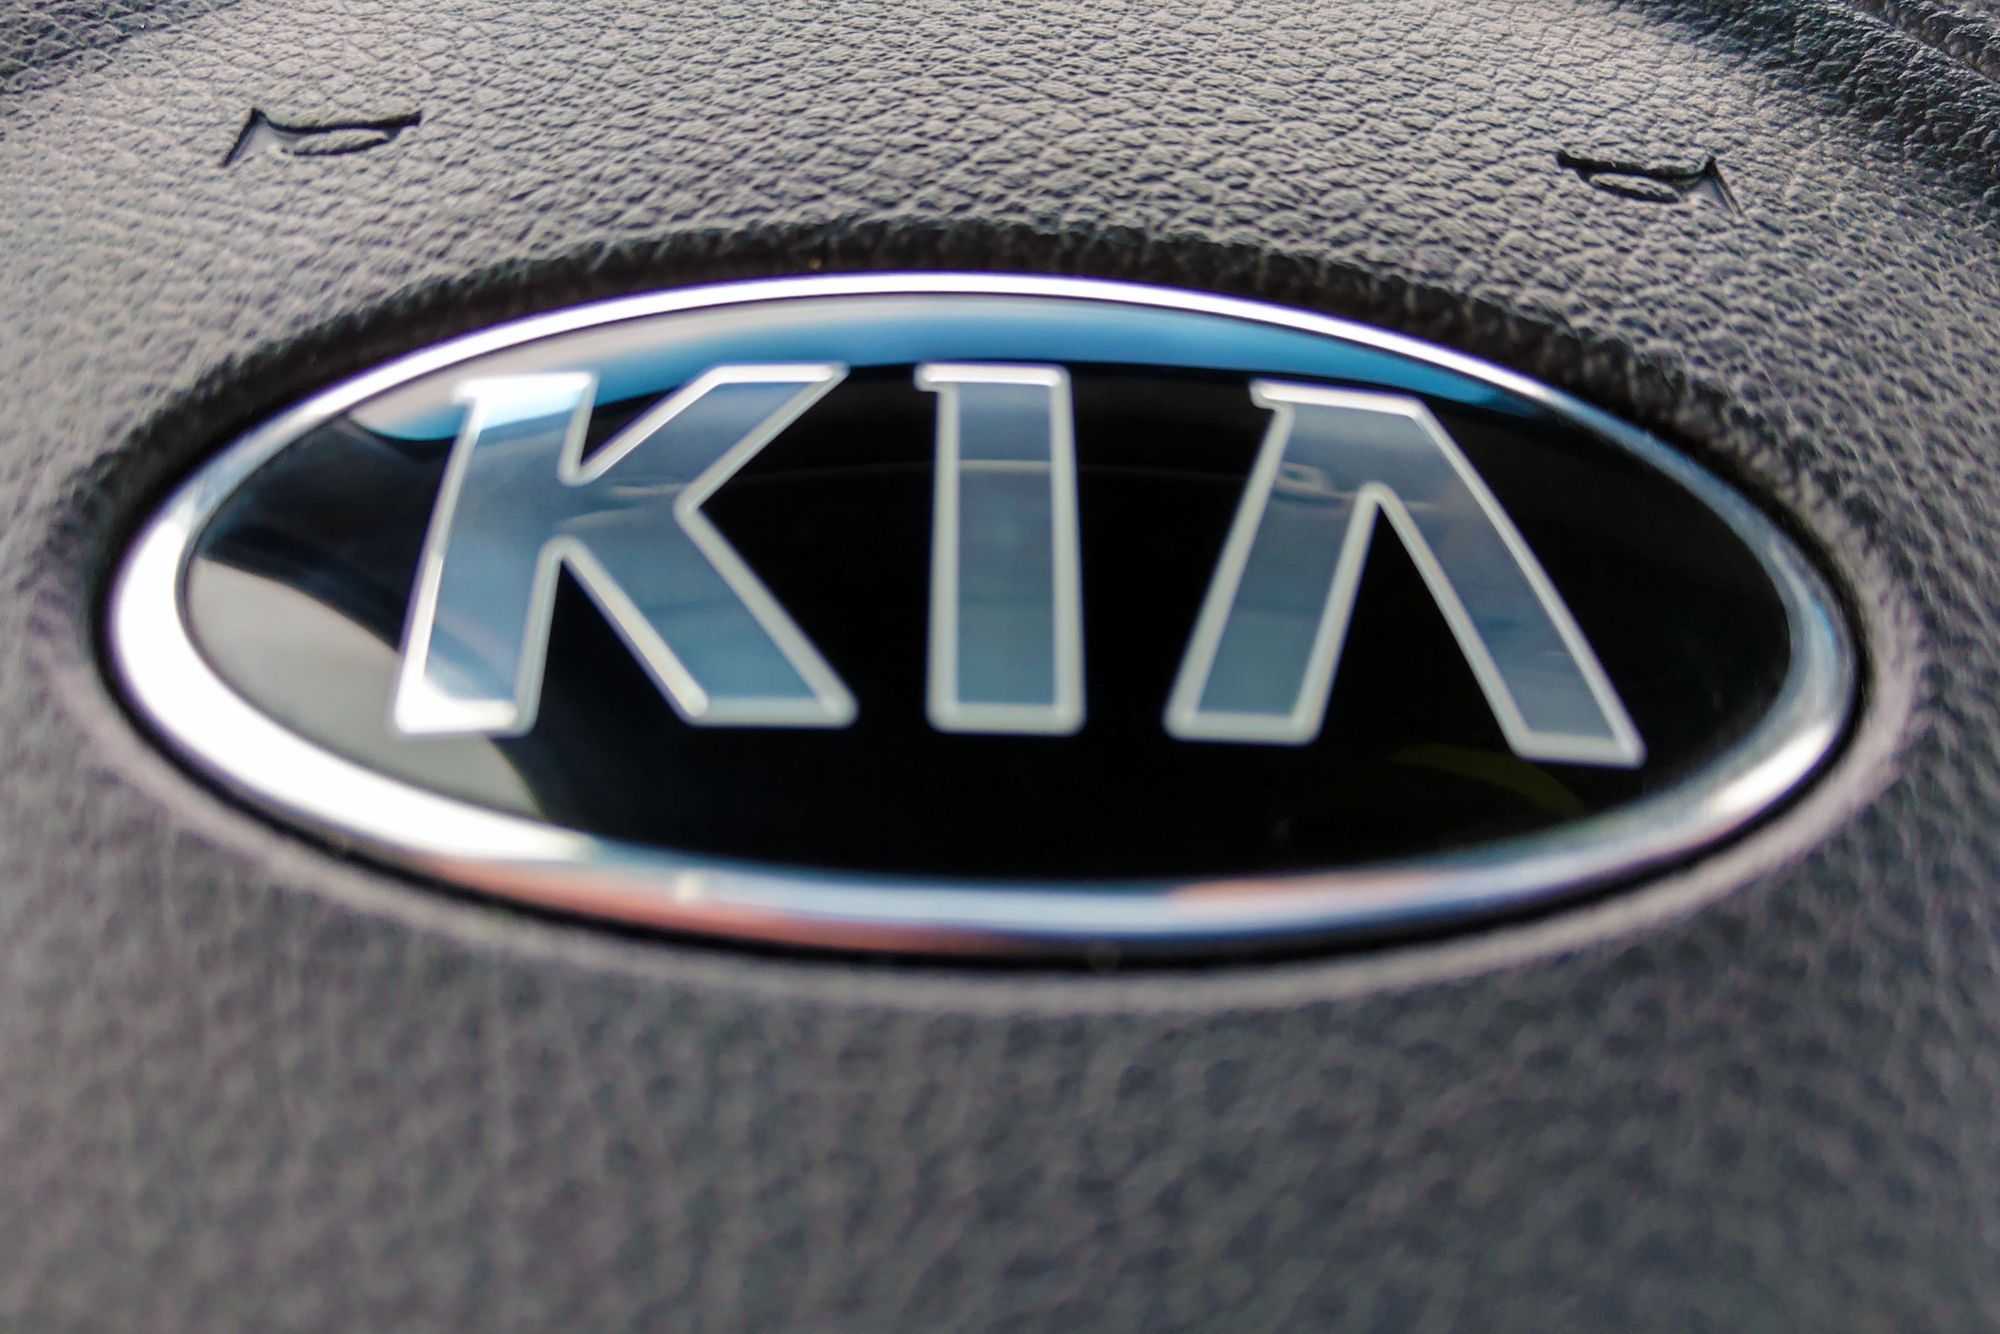 Kia recalls $380K vehicles over fire risk